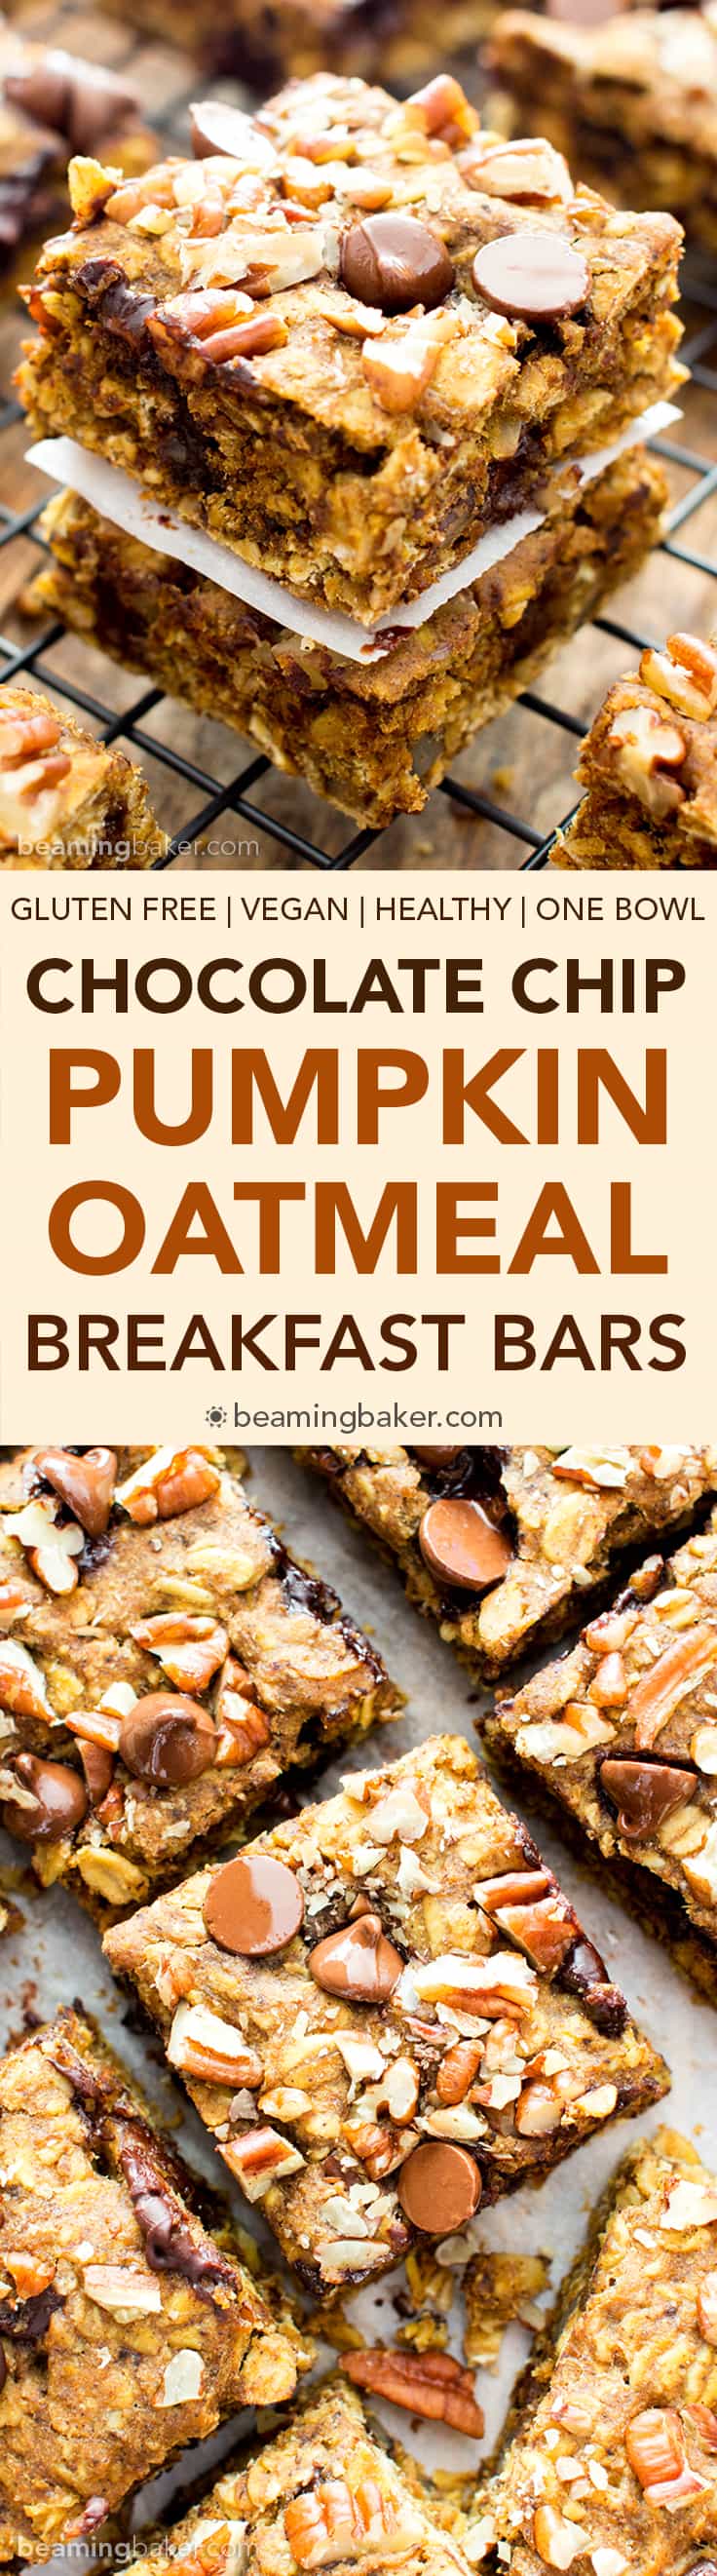 Gluten free pumpkin bars bursting with pumpkin spice goodness. Easy to customize pumpkin oatmeal bars that are vegan. #GlutenFree #Pumpkin #Vegan #PumpkinBars | Recipe at BeamingBaker.com